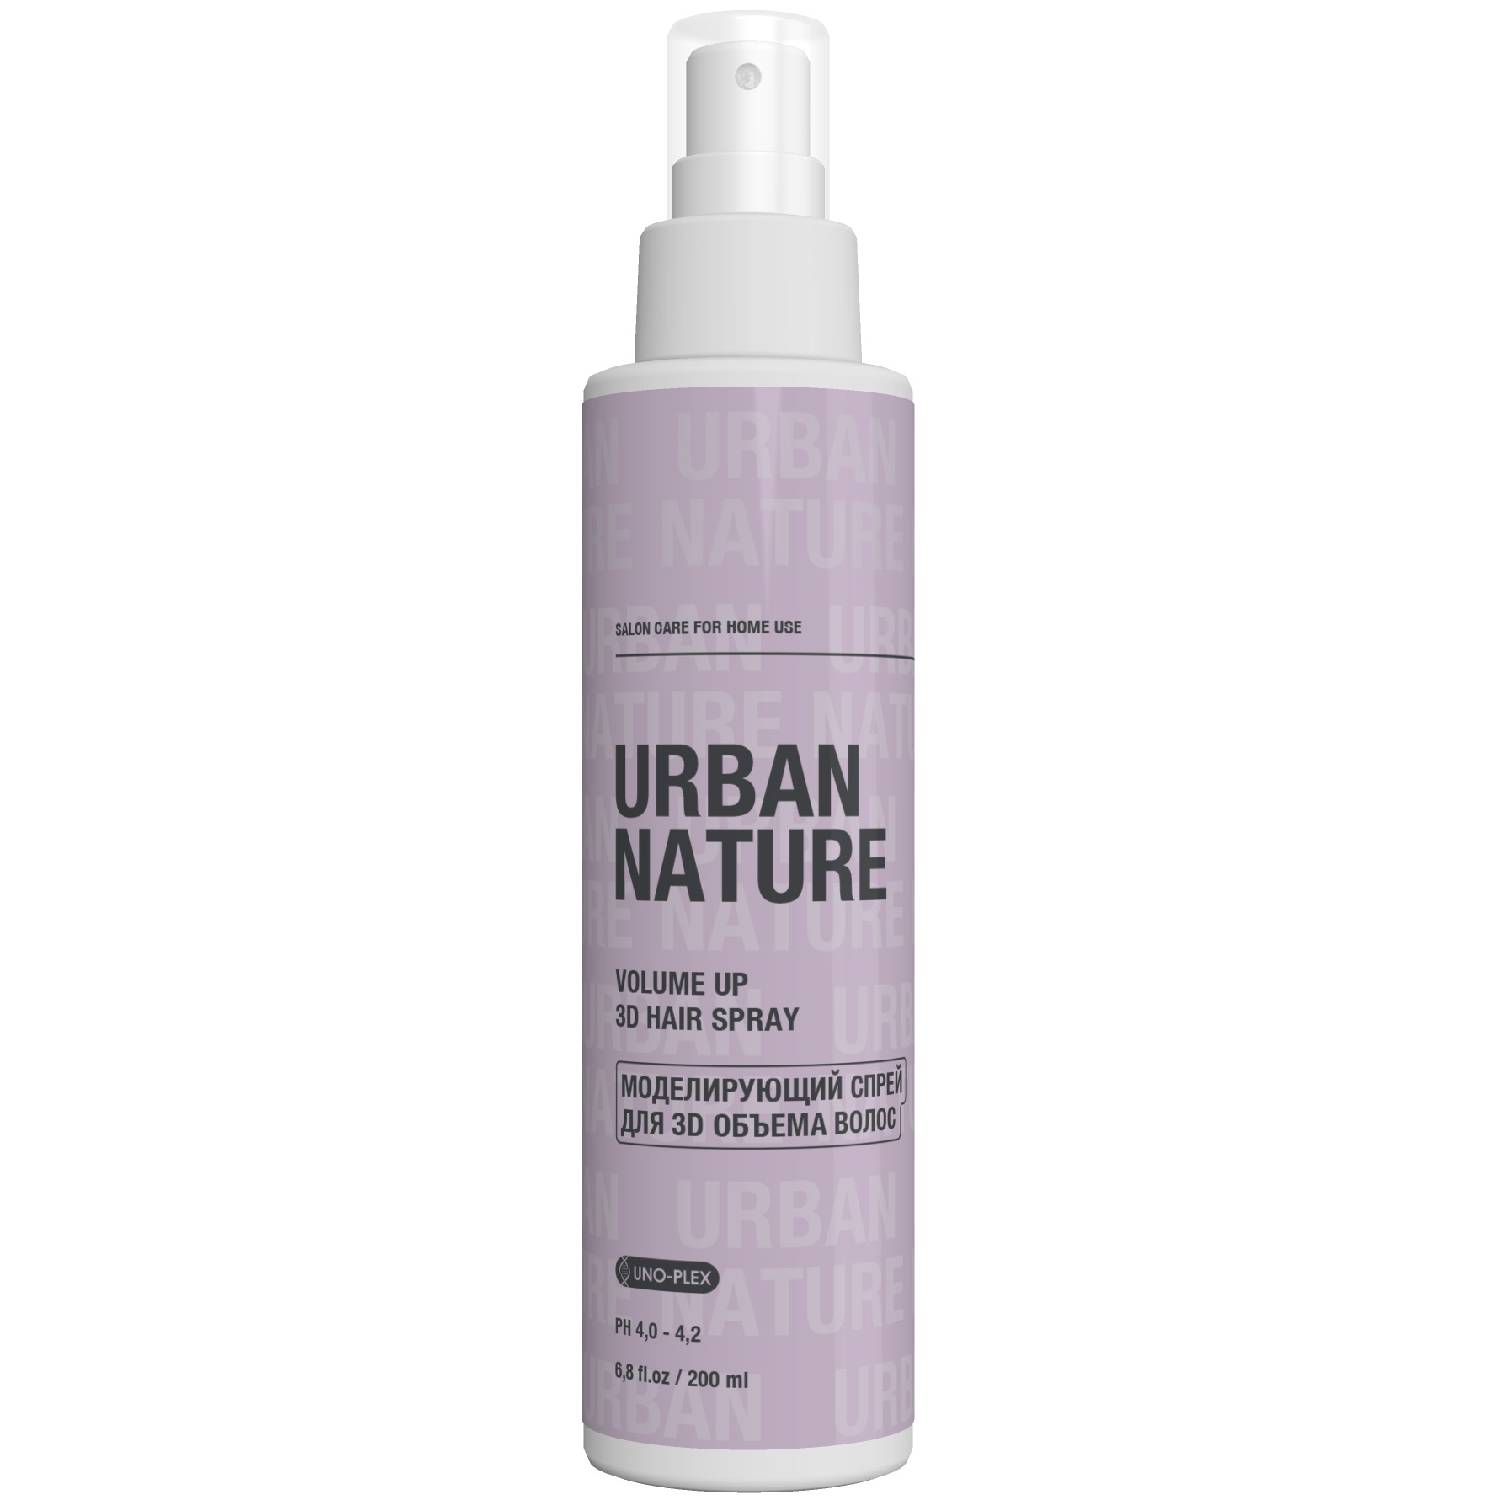 спрей для ухода за волосами urban nature volume up 3d hair spray моделирующий спрей для 3d объема волос Urban Nature Моделирующий спрей для 3D объема волос, 200 мл (Urban Nature, Volume Up)